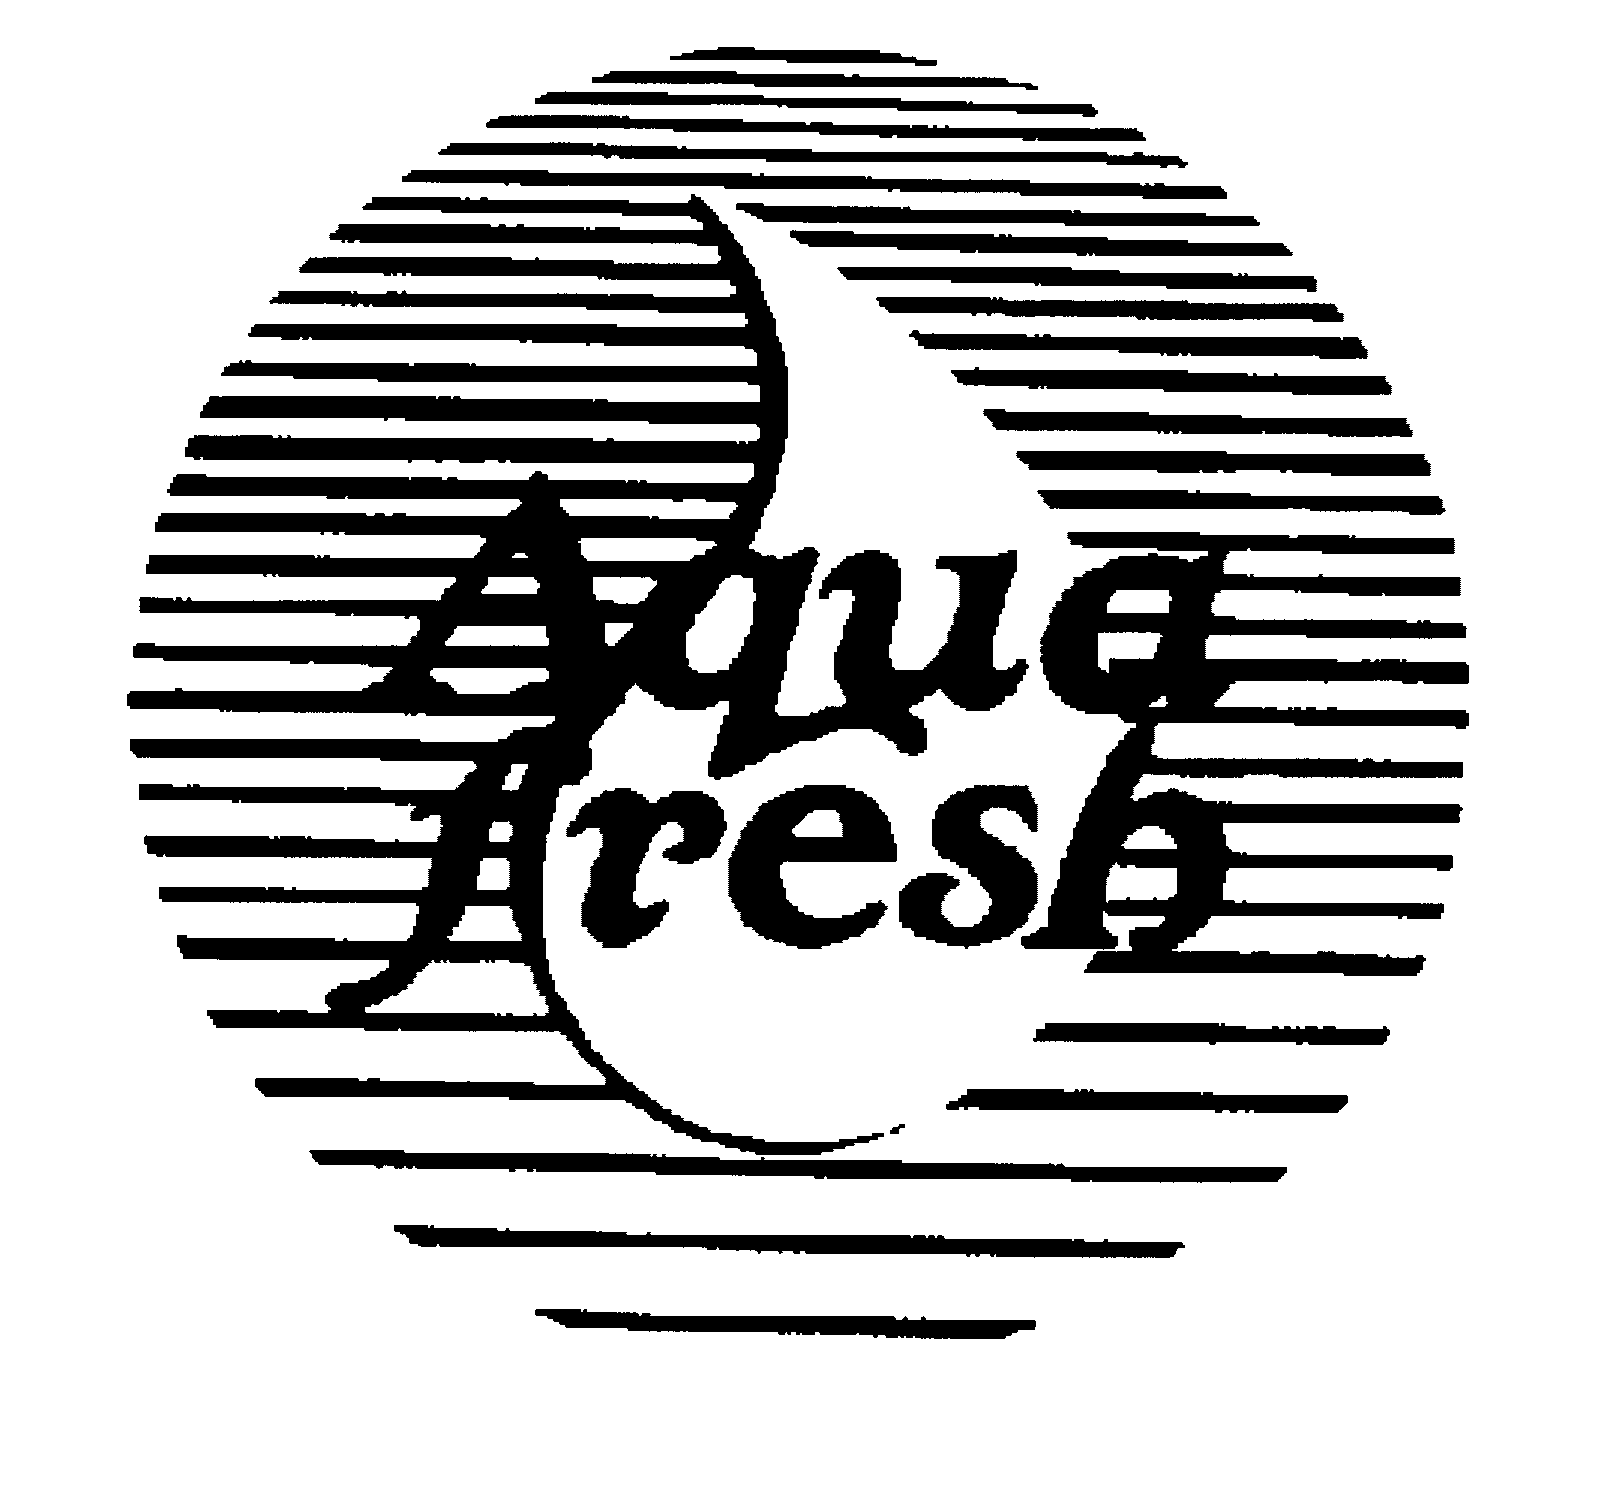 Trademark Logo AQUA FRESH